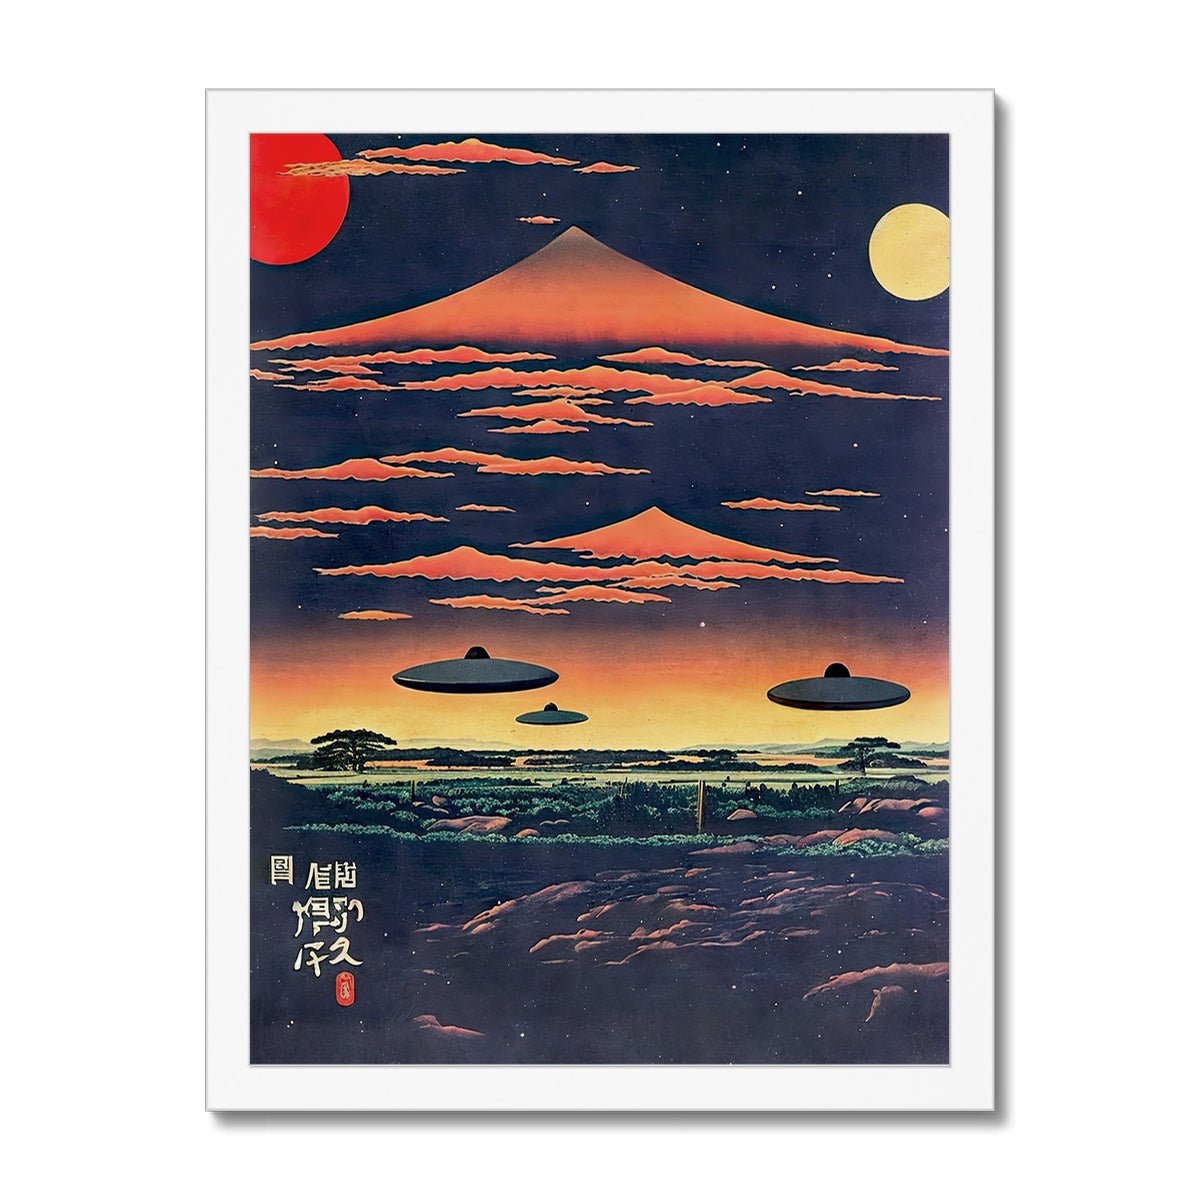 Fine art 6"x8" / White Frame Extraterrestrial Japanese Art | UFO Space ET Aliens, 宇宙人 Japanese Surrealism, Original Vintage Fantasy Framed Art Print